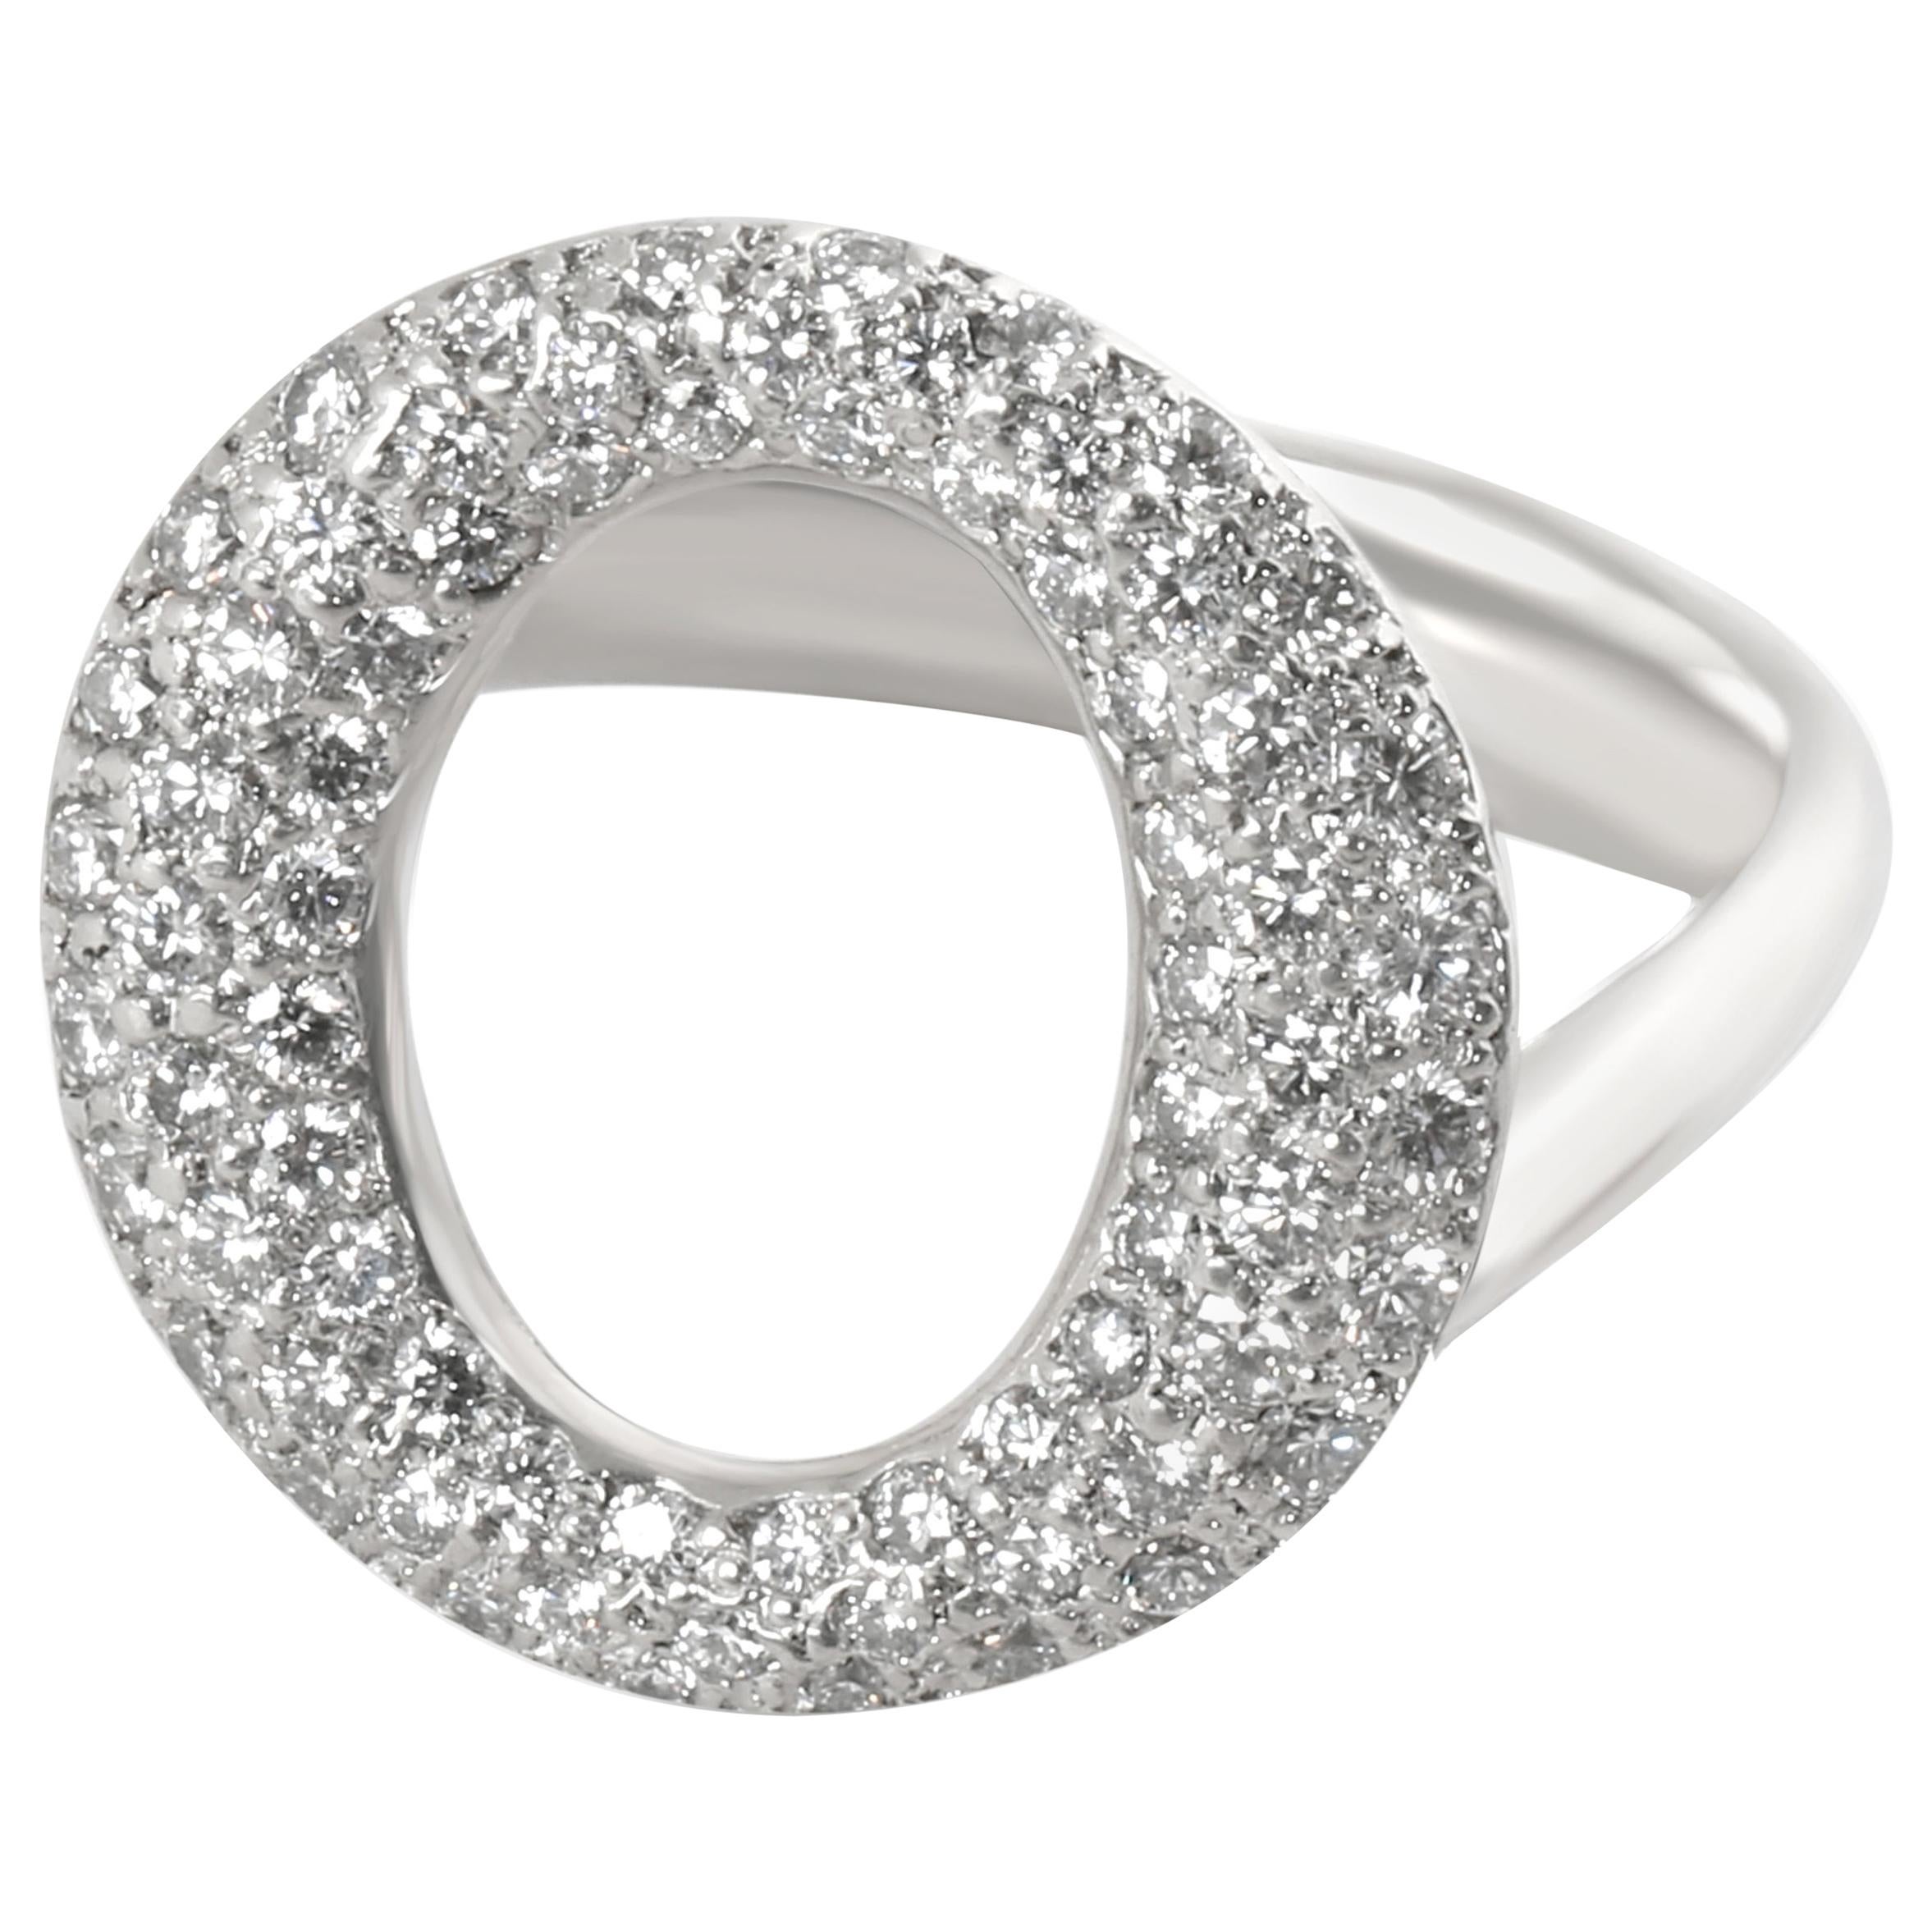 Tiffany & Co. Elsa Peretti Sevillana Diamond Ring in Platinum 0.8 Carat